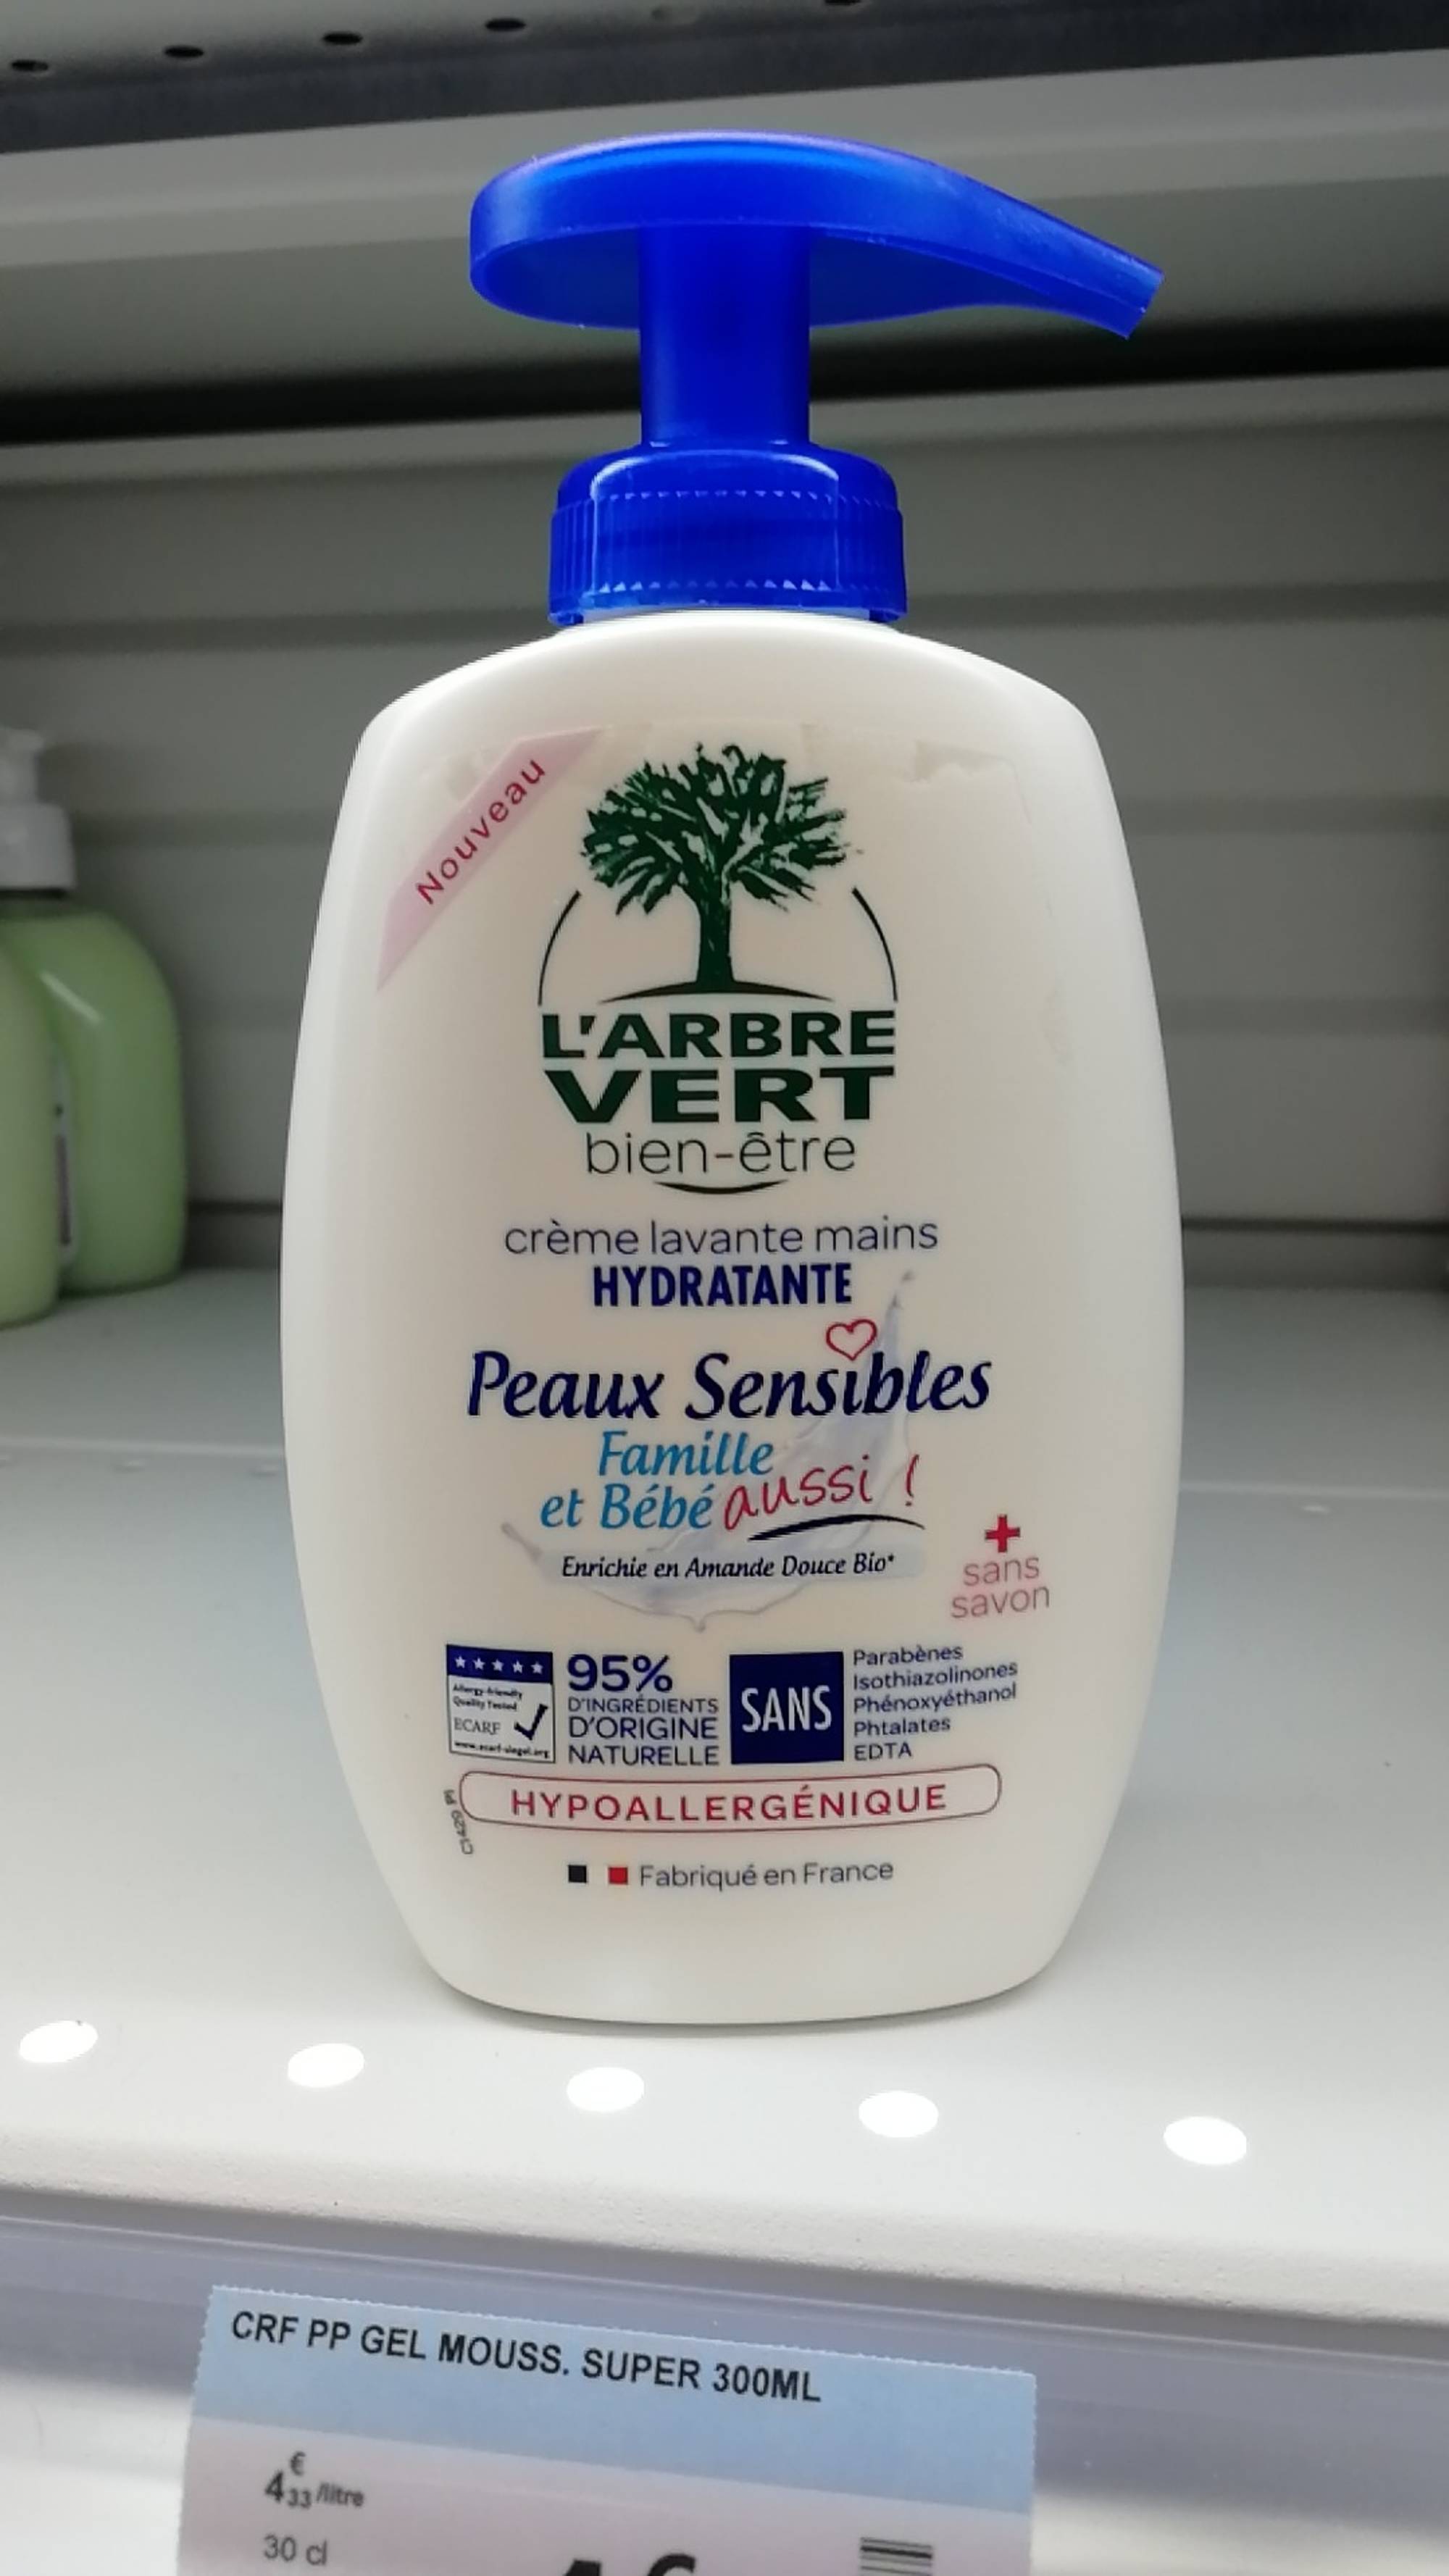 Lessive liquide écologique peau sensible - 1,5l - L'Arbre Vert